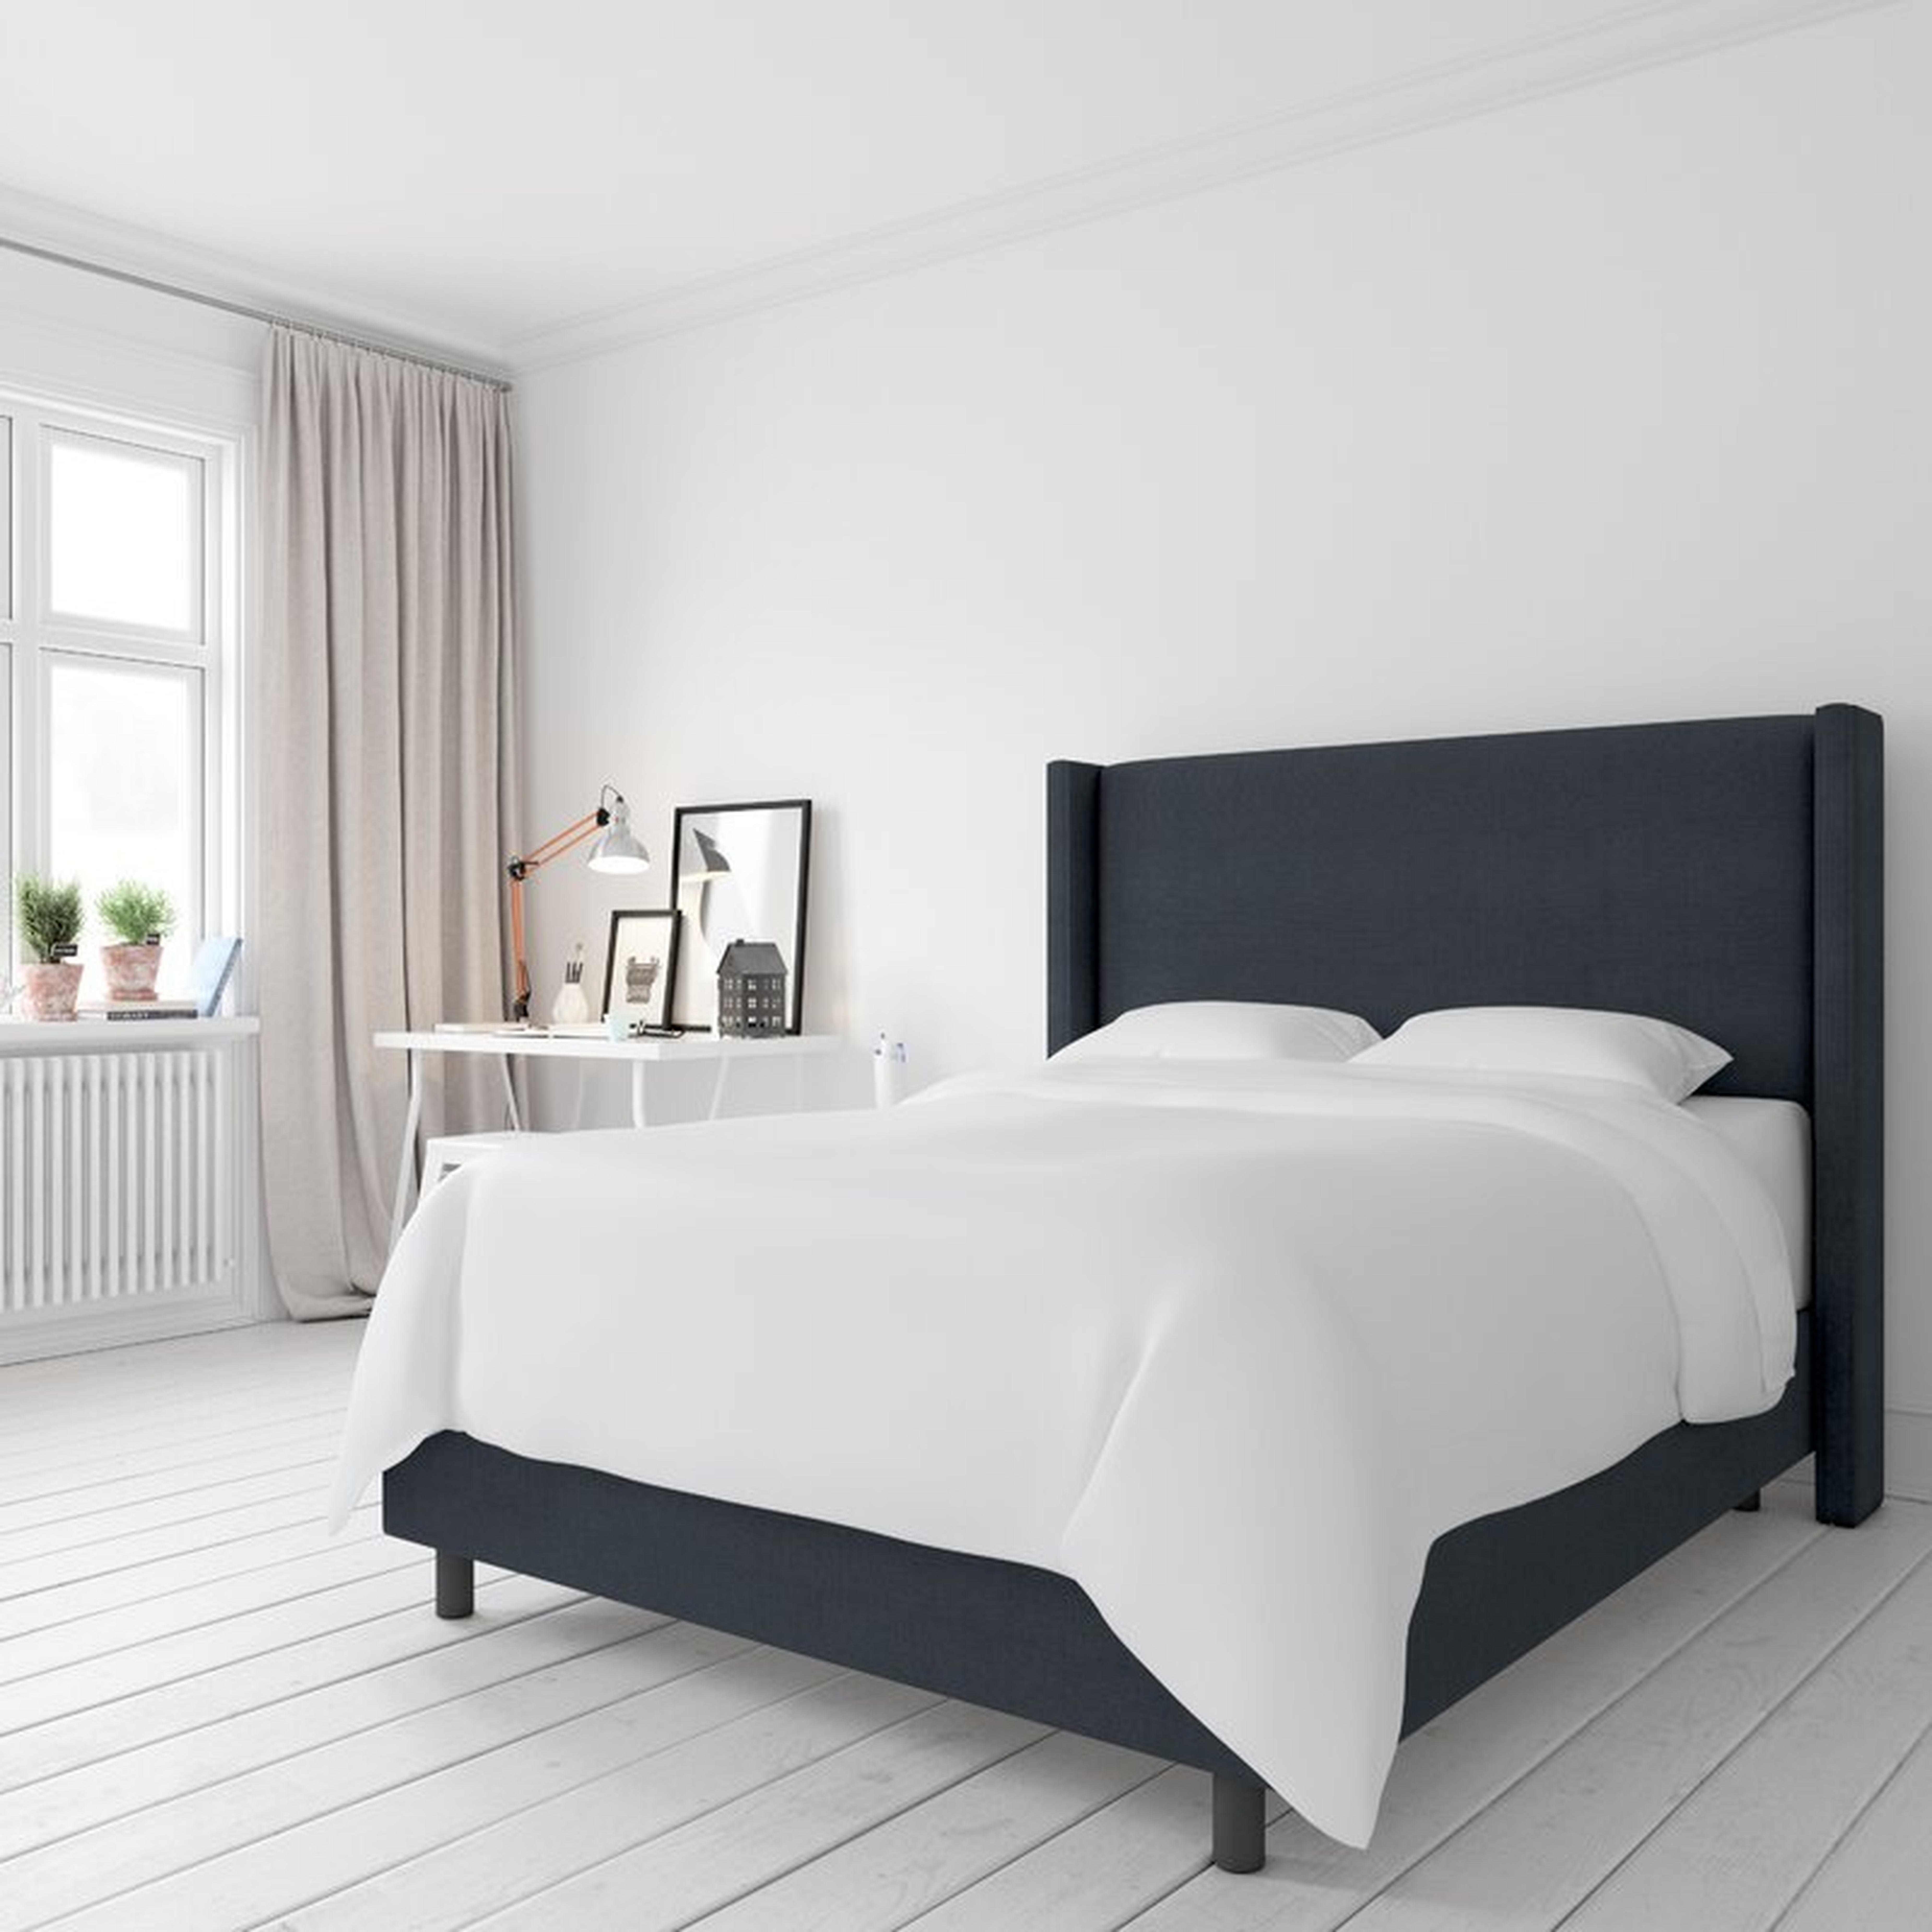 Sanford Upholstered Standard Bed - Wayfair